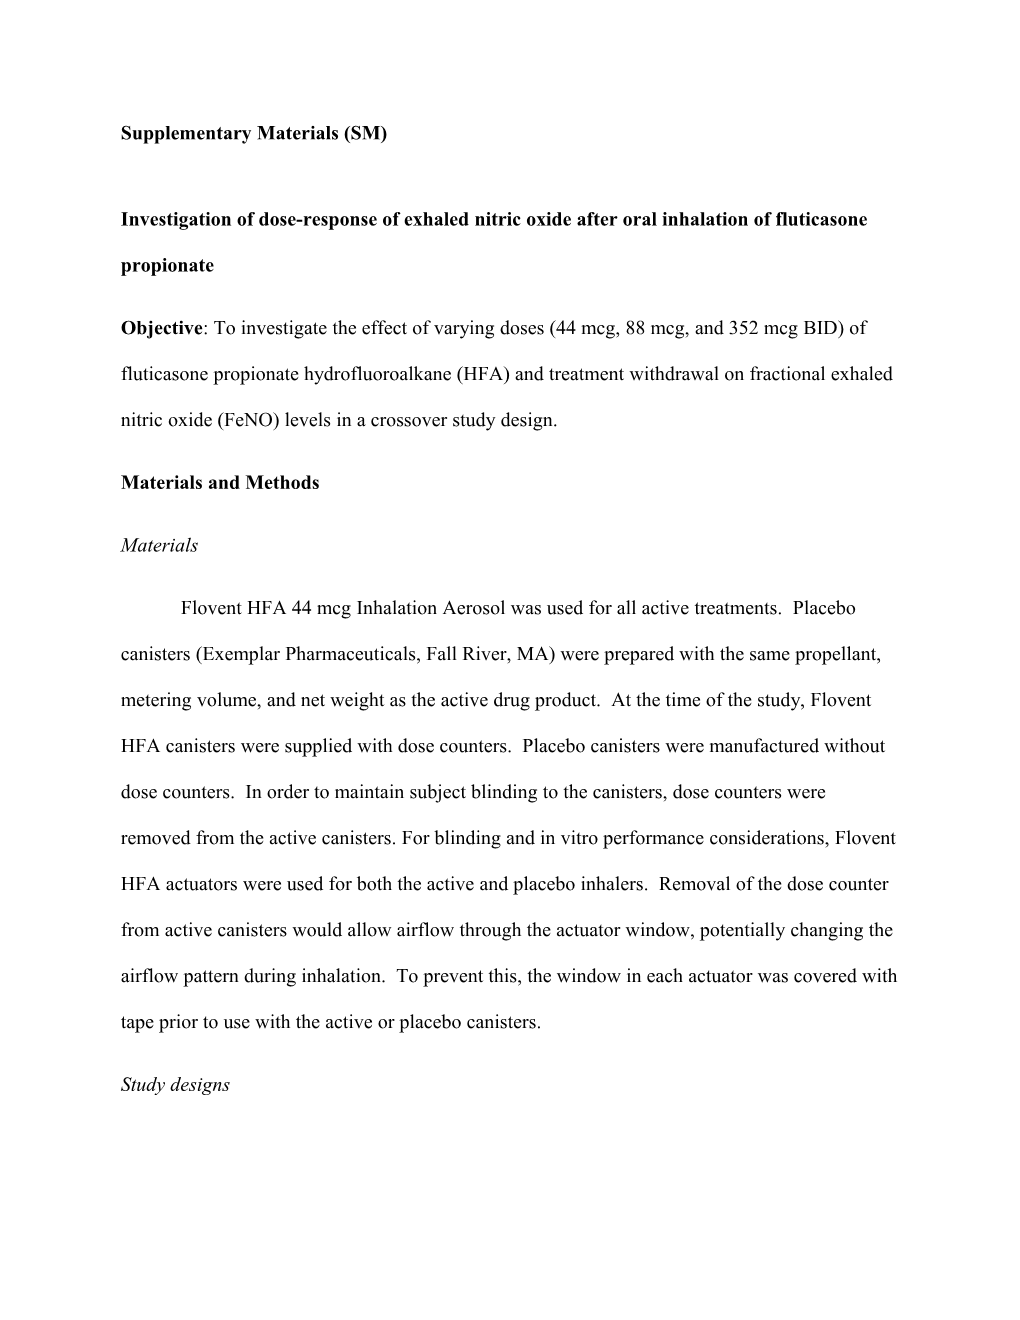 Investigation of Dose-Response of Exhaled Nitric Oxide After Oral Inhalation of Fluticasone